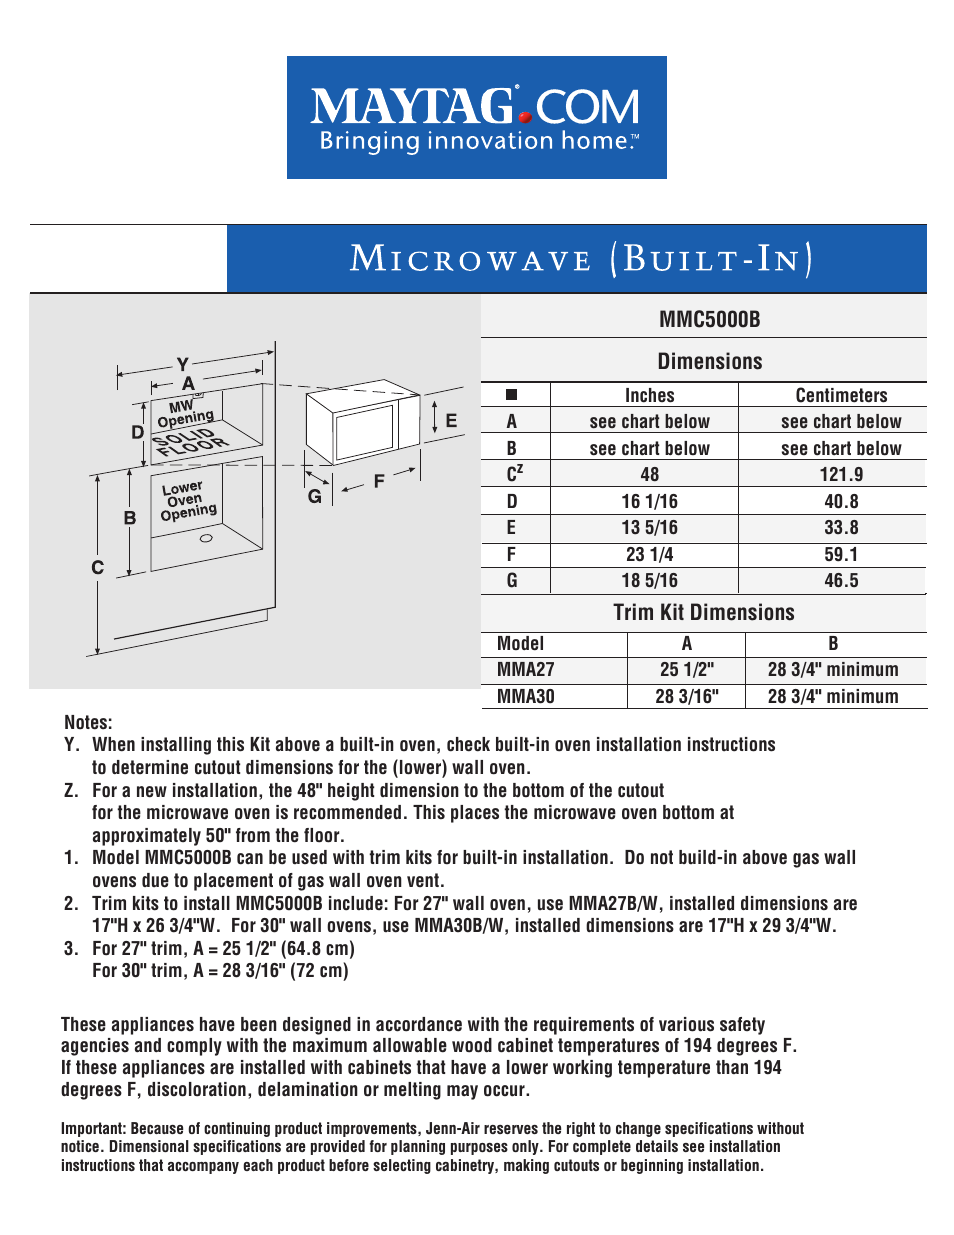 MMC5000BDW Dimension Guide